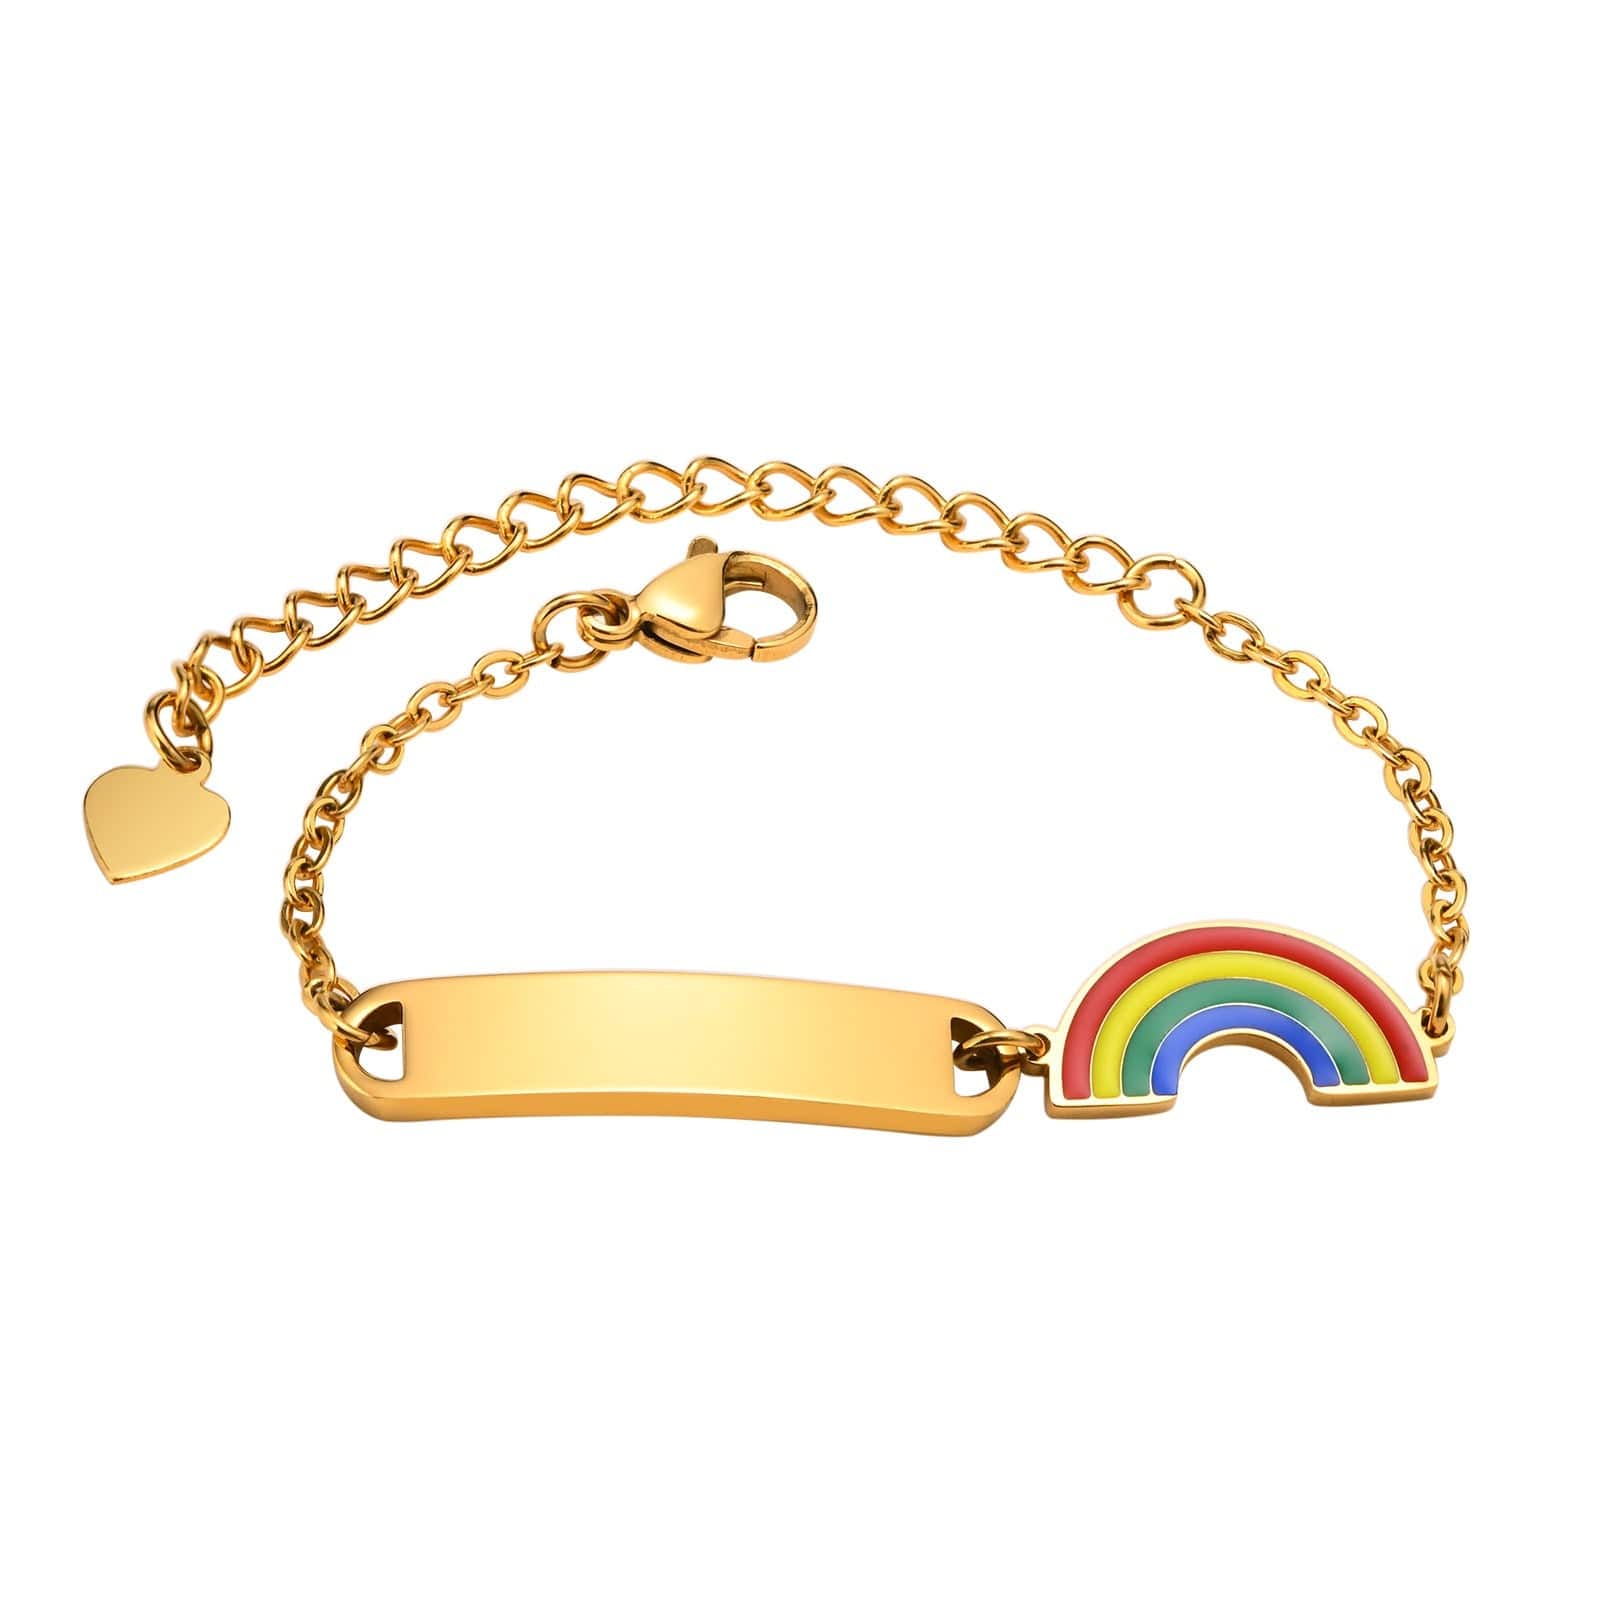 VVS Jewelry hip hop jewelry Gold Rainbow Custom Baby Engraved Name Adjustable Bracelet with Charm